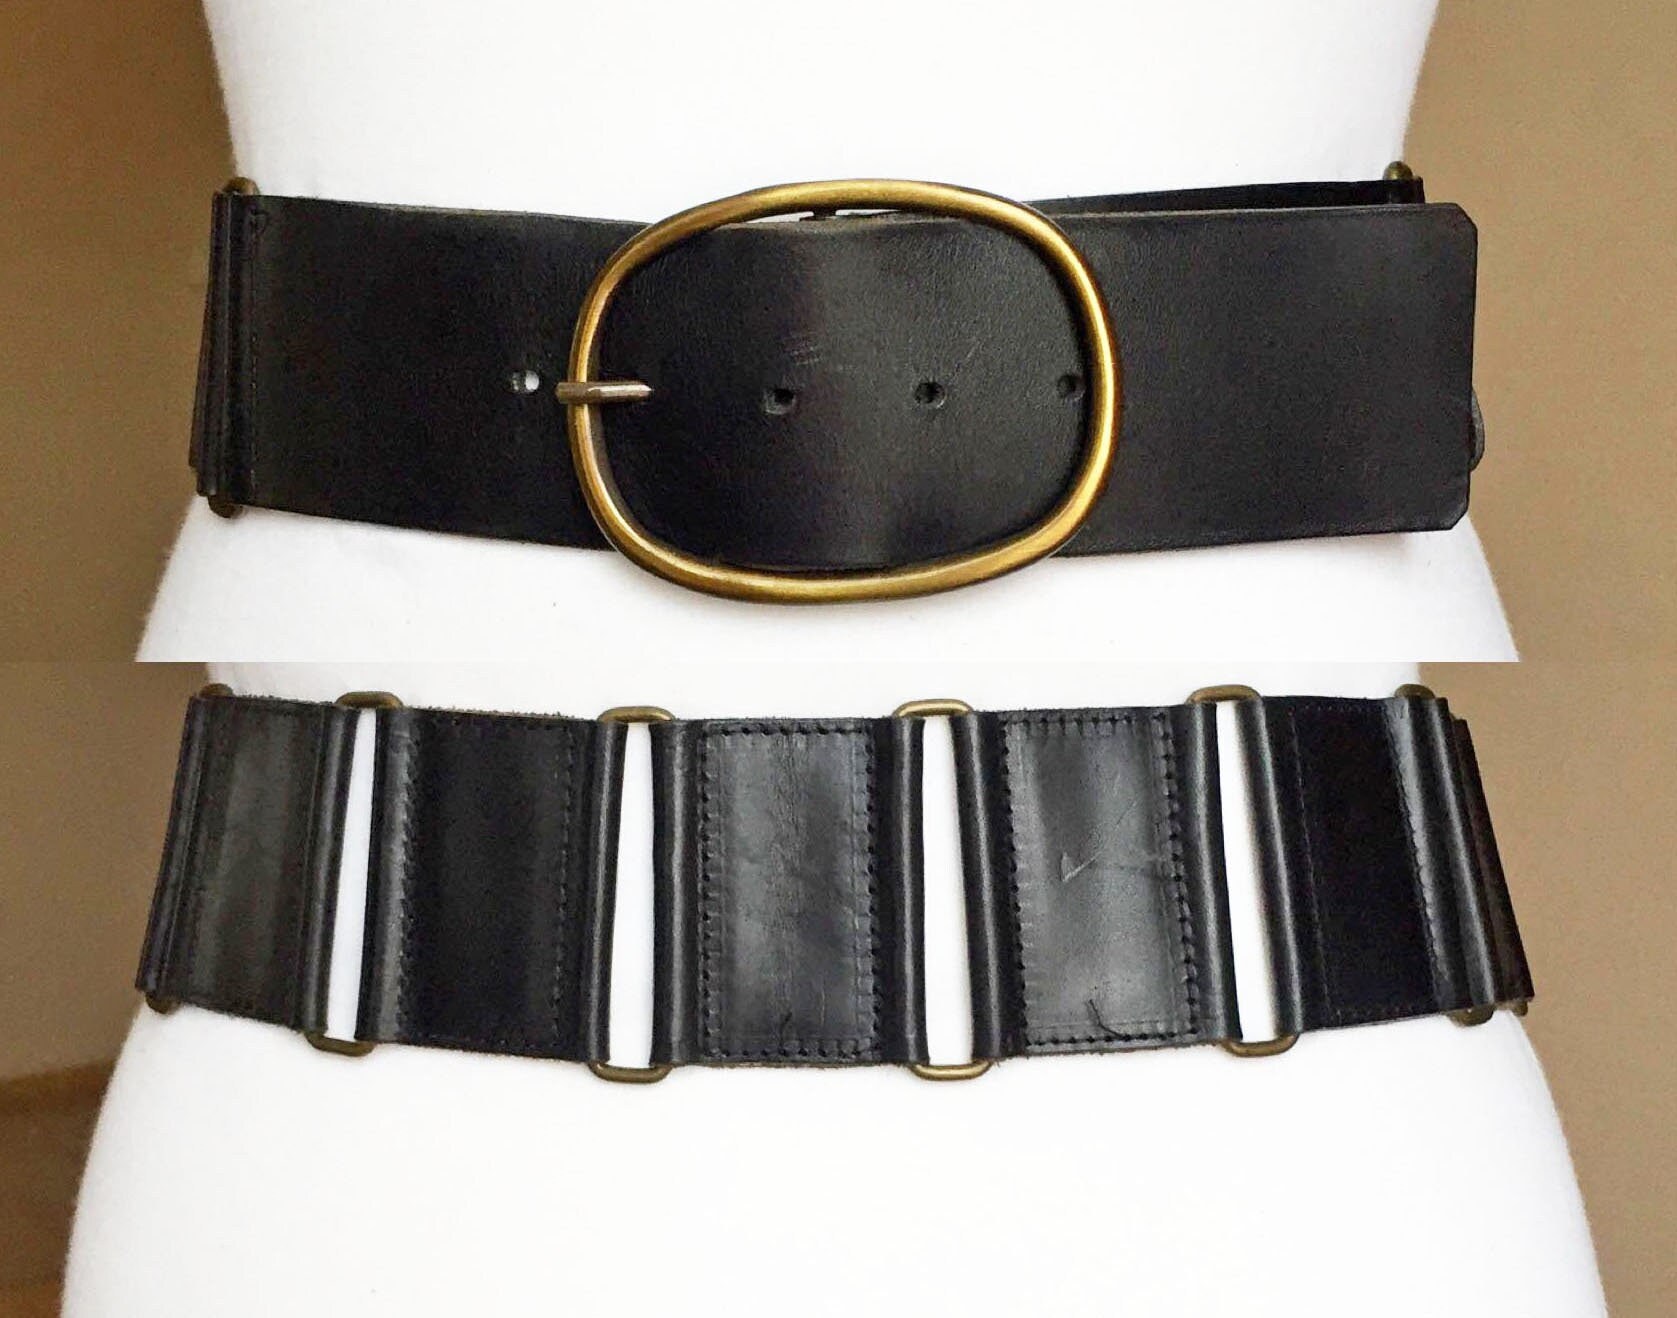 Vintage Plum Brown Grommets Soft Leather Belt Solid Brass Buckle